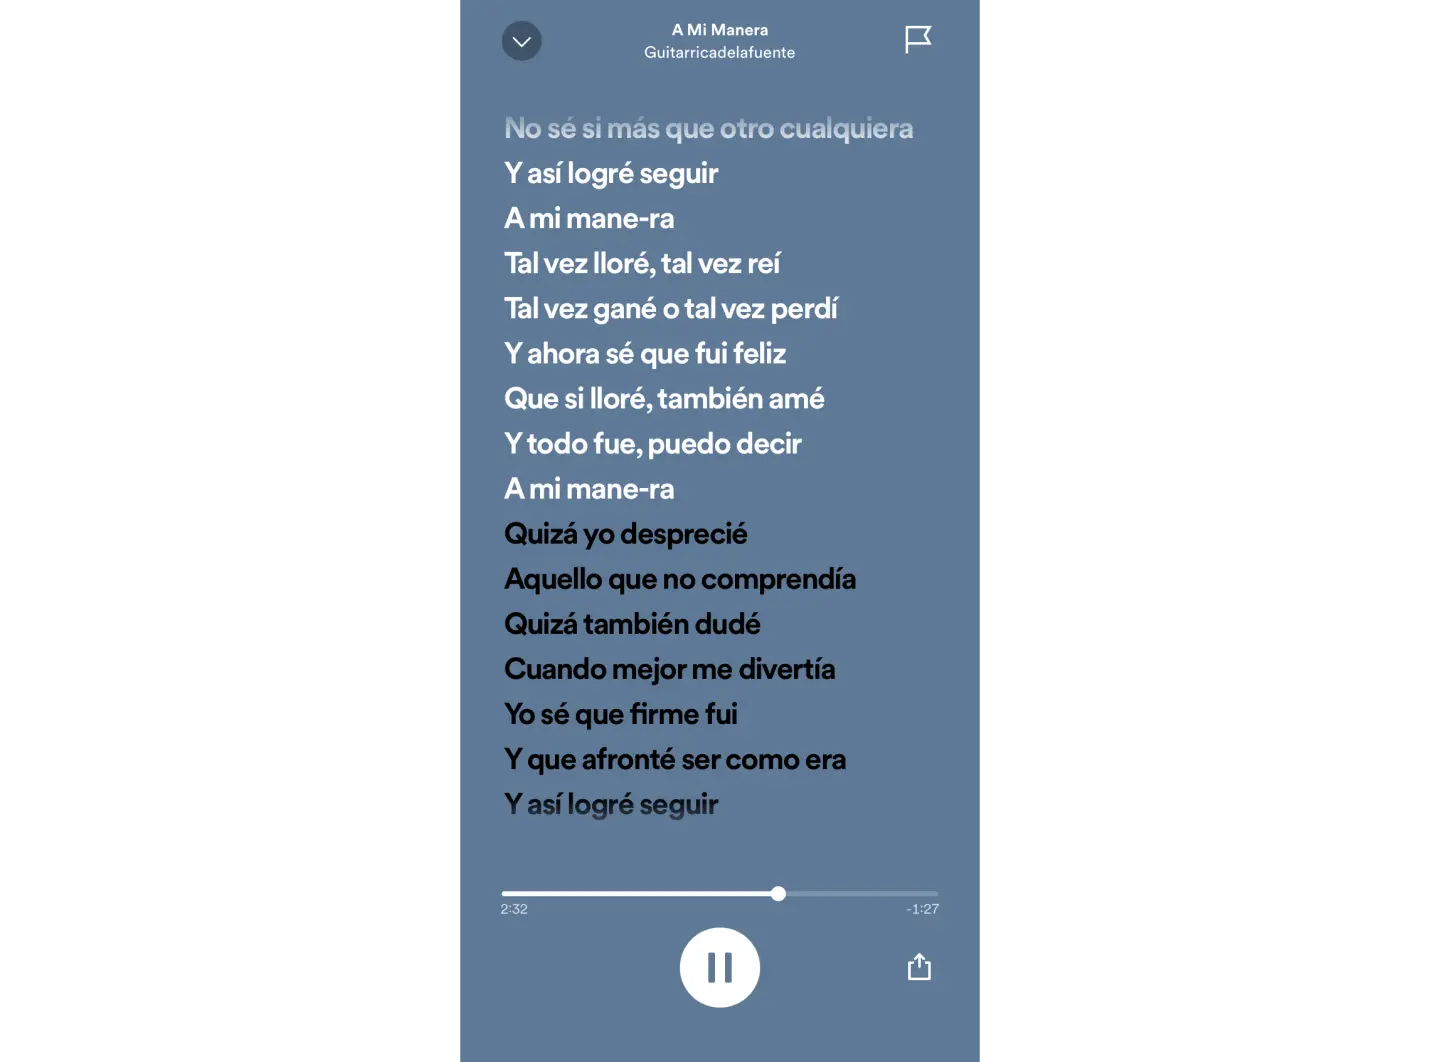 Screenshot of A mi manera lyrics from Spotify